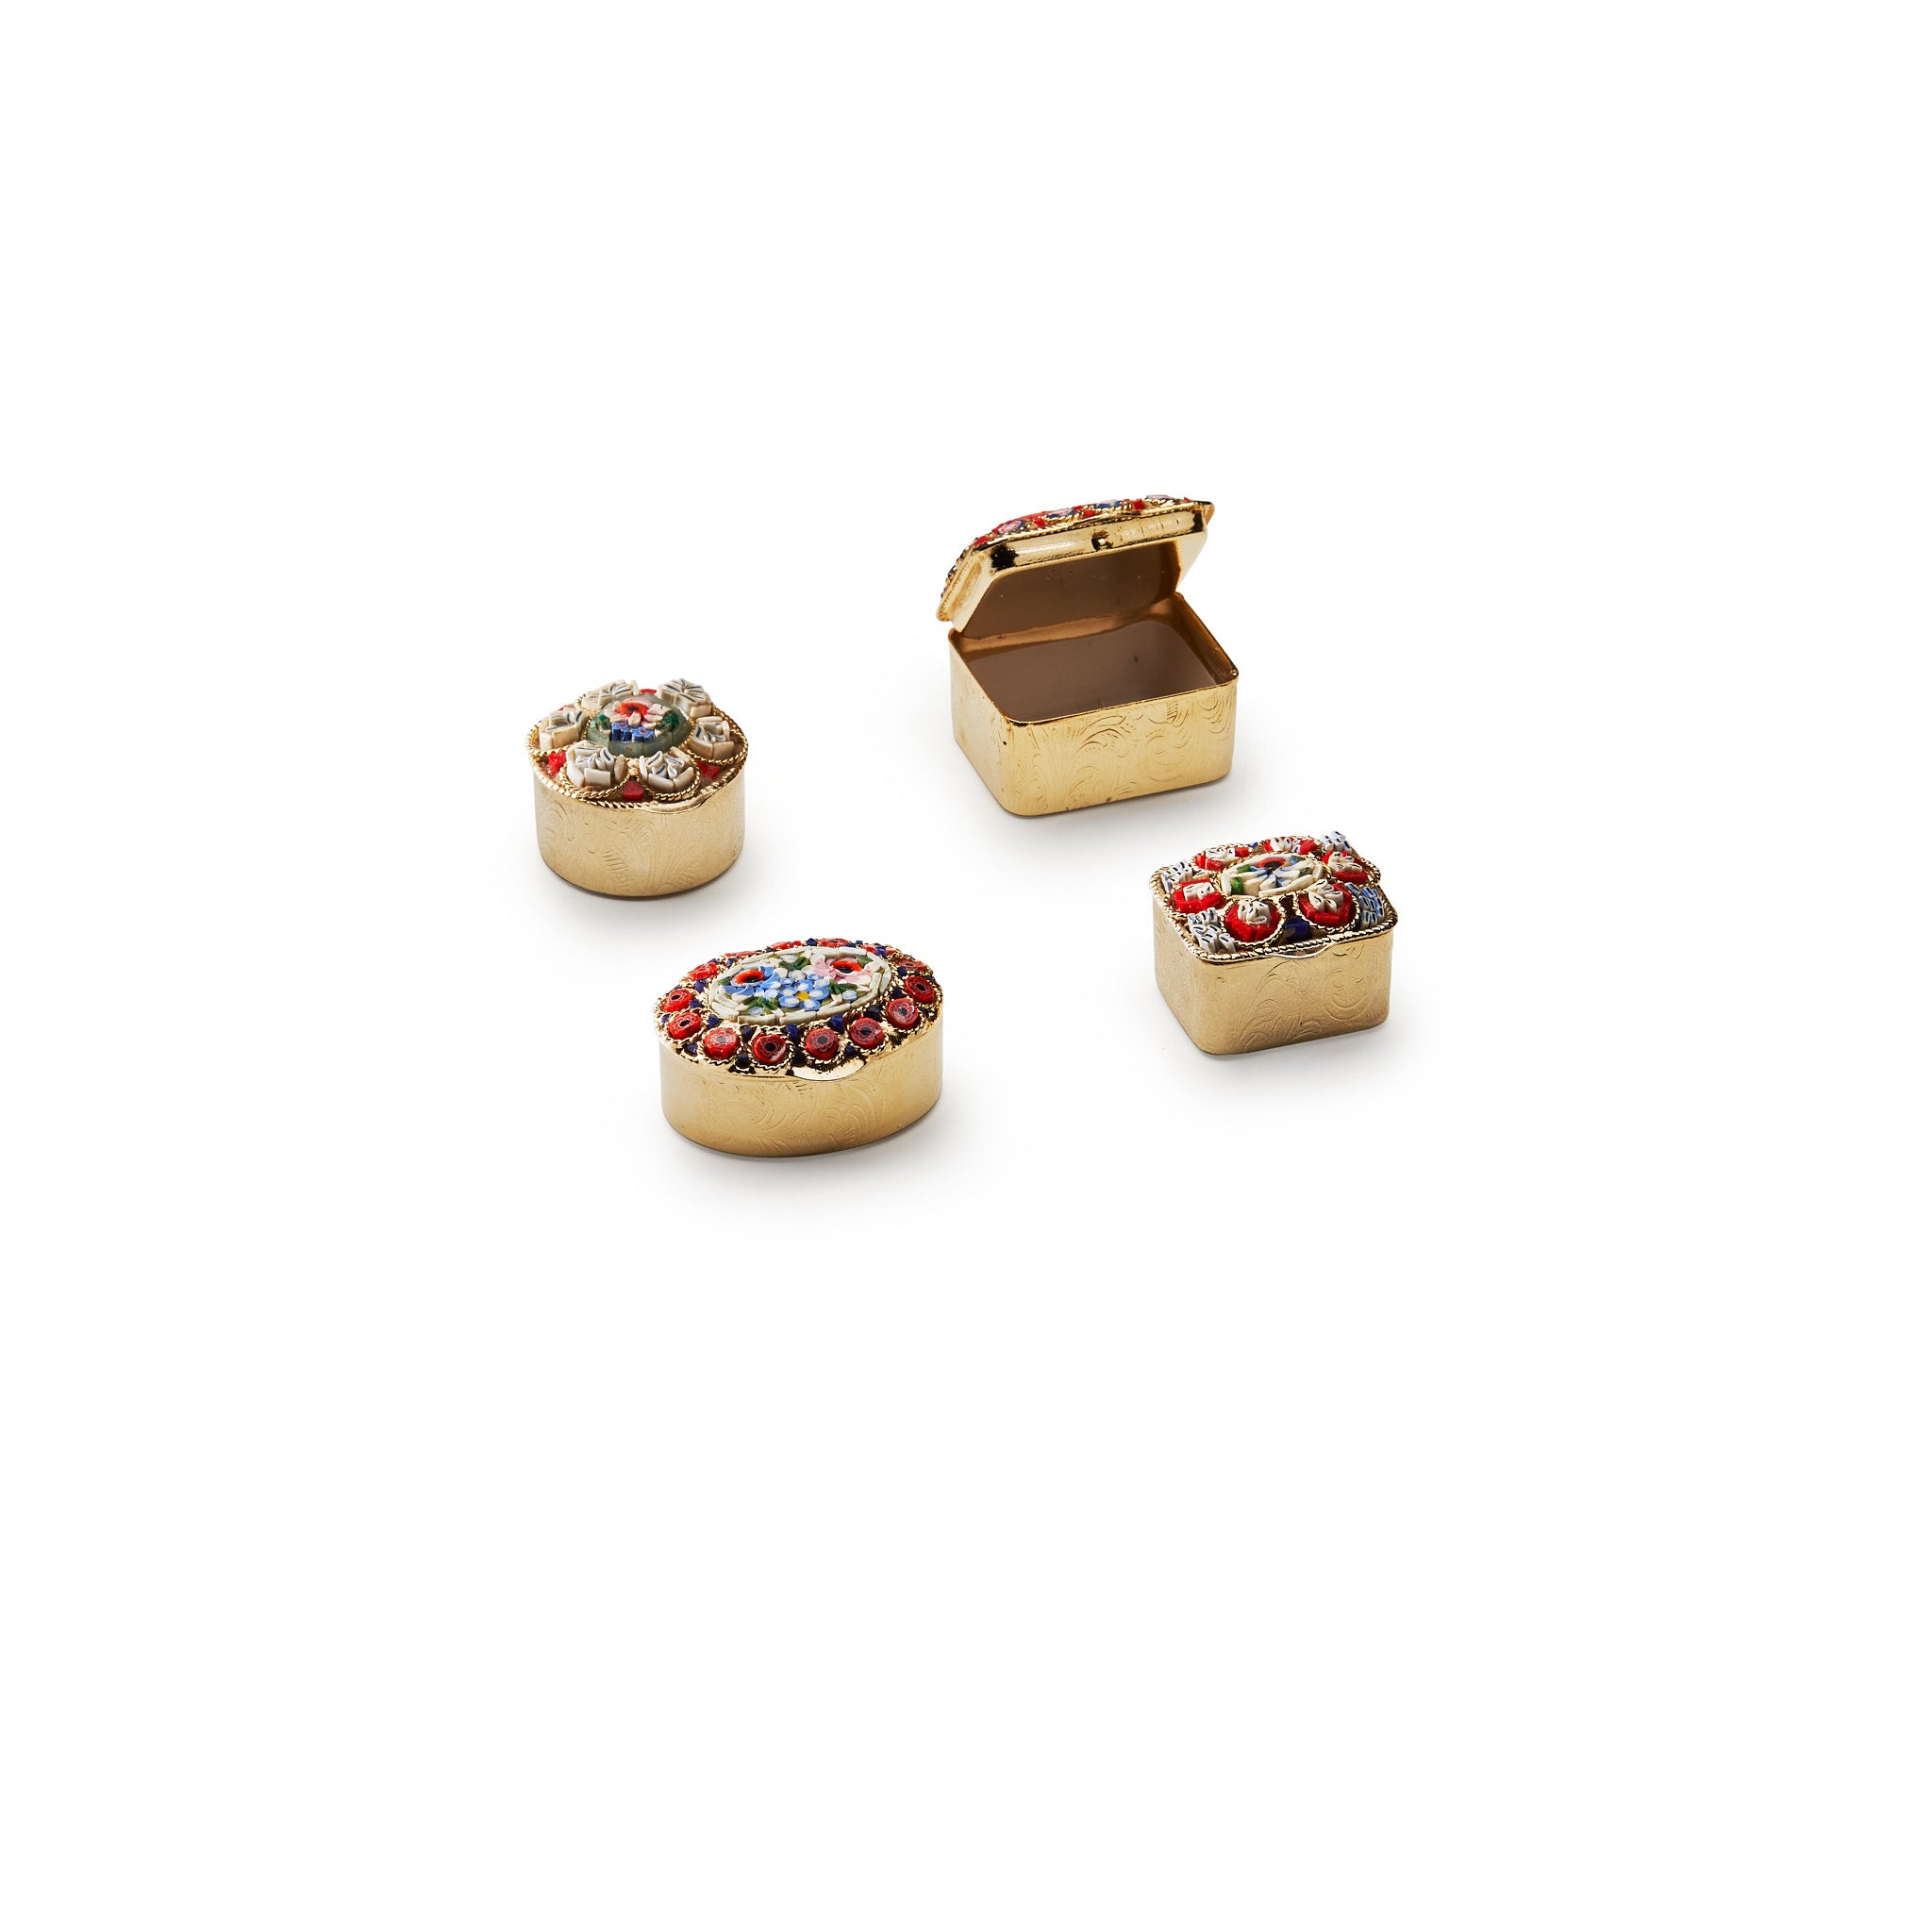 Traversari-Artisan-Mosaics-Product-Set-of-4-small-gold-plated-brass-boxes-with-glass-mosaic